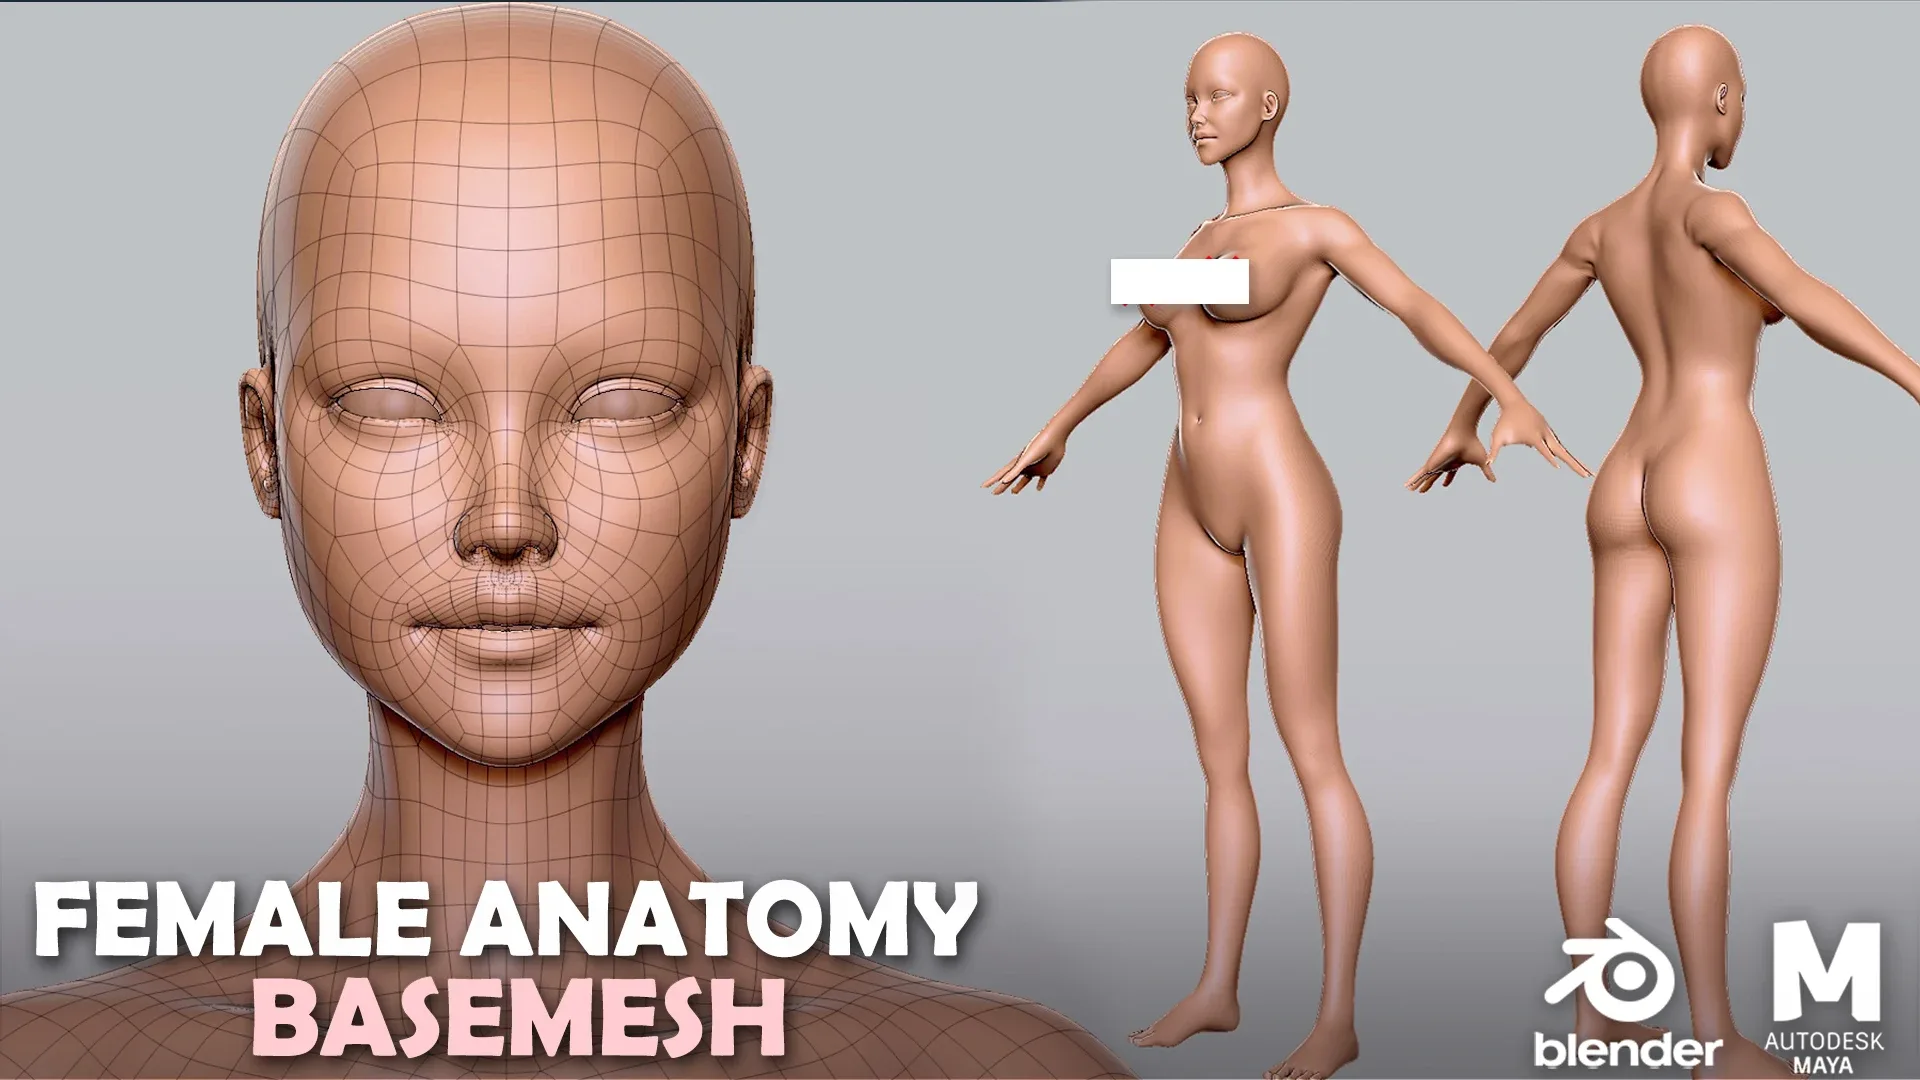 Blender - BaseMesh Anatomy Collection - Topology + UV Map